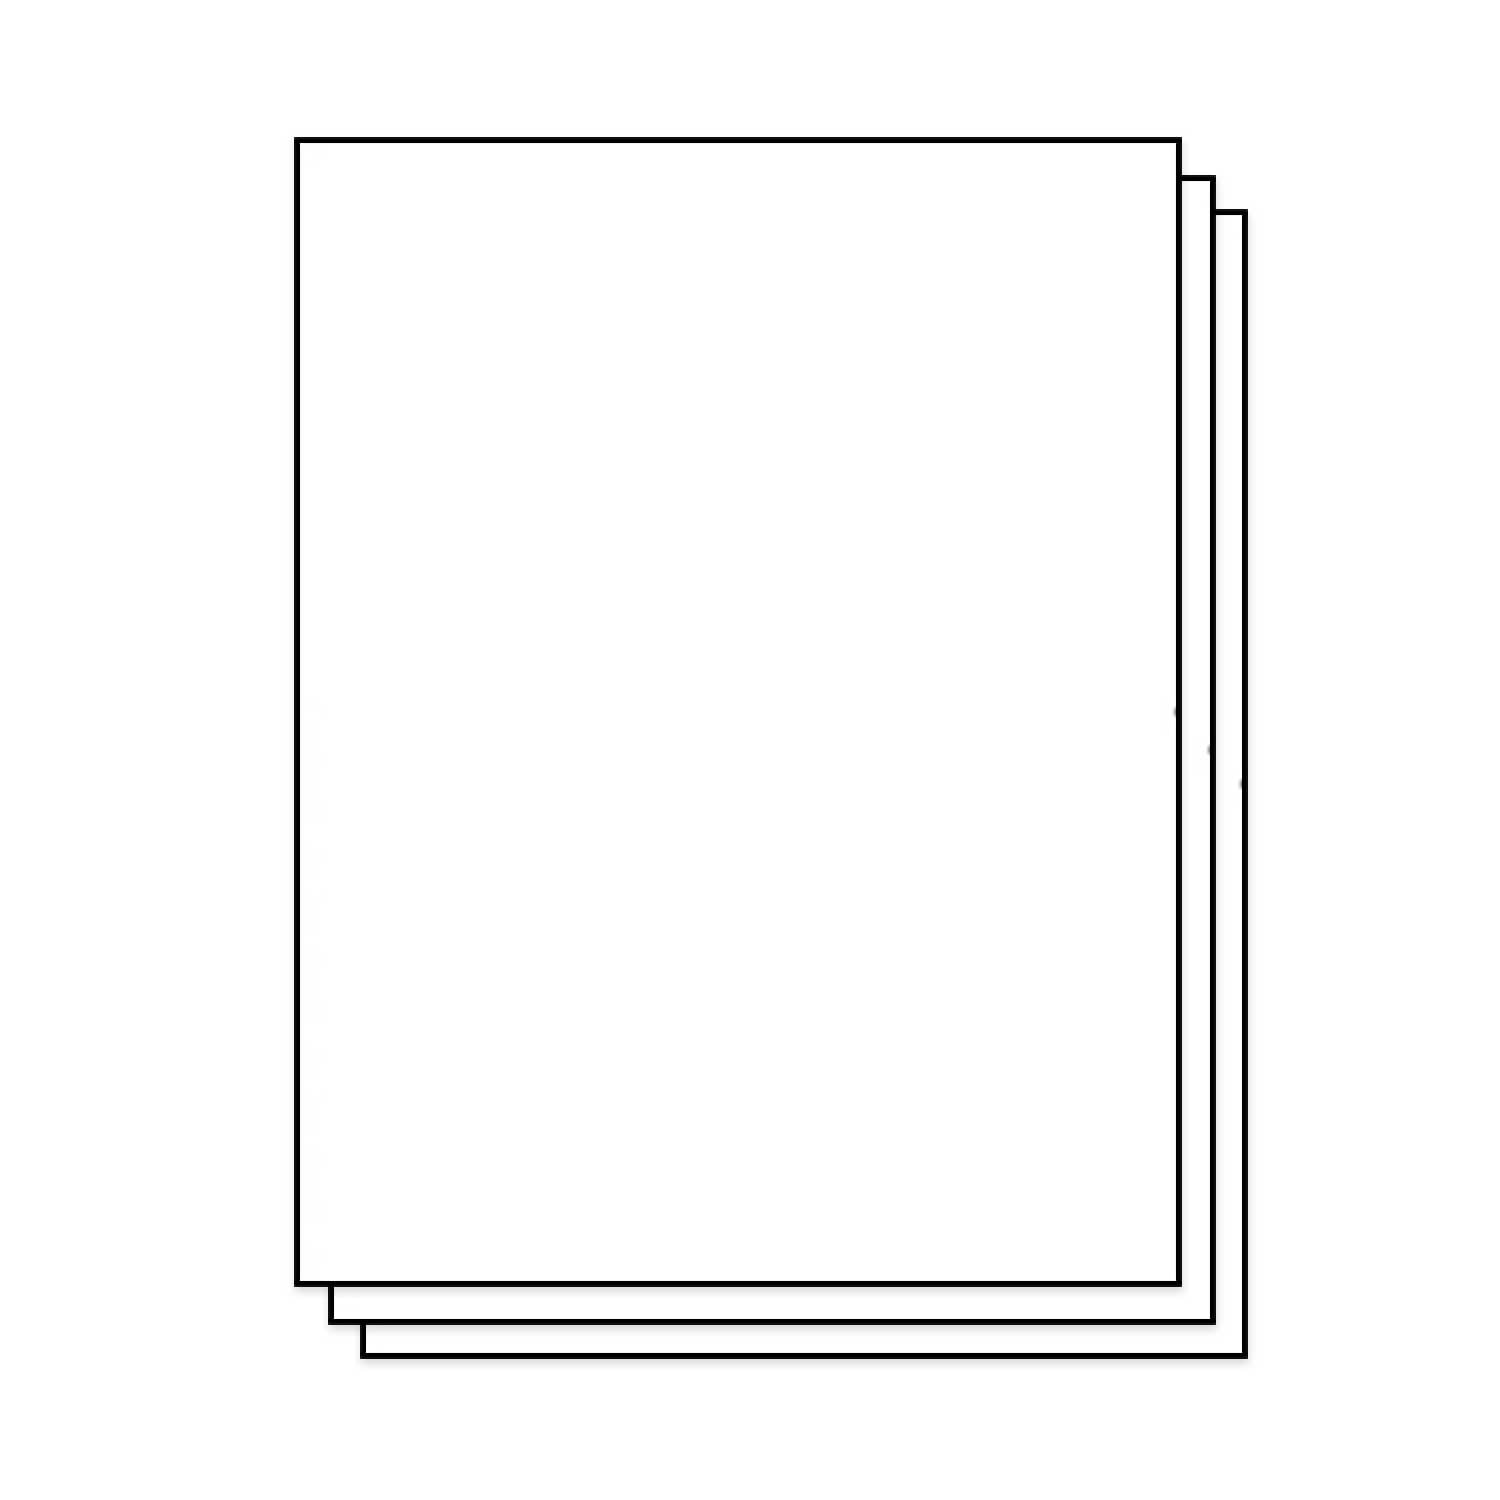  Sticker Paper, 100 Sheets, White Matte, 8.5 x 11 Full Sheet  Label, Inkjet or Laser Printer, Online Labels : Office Products